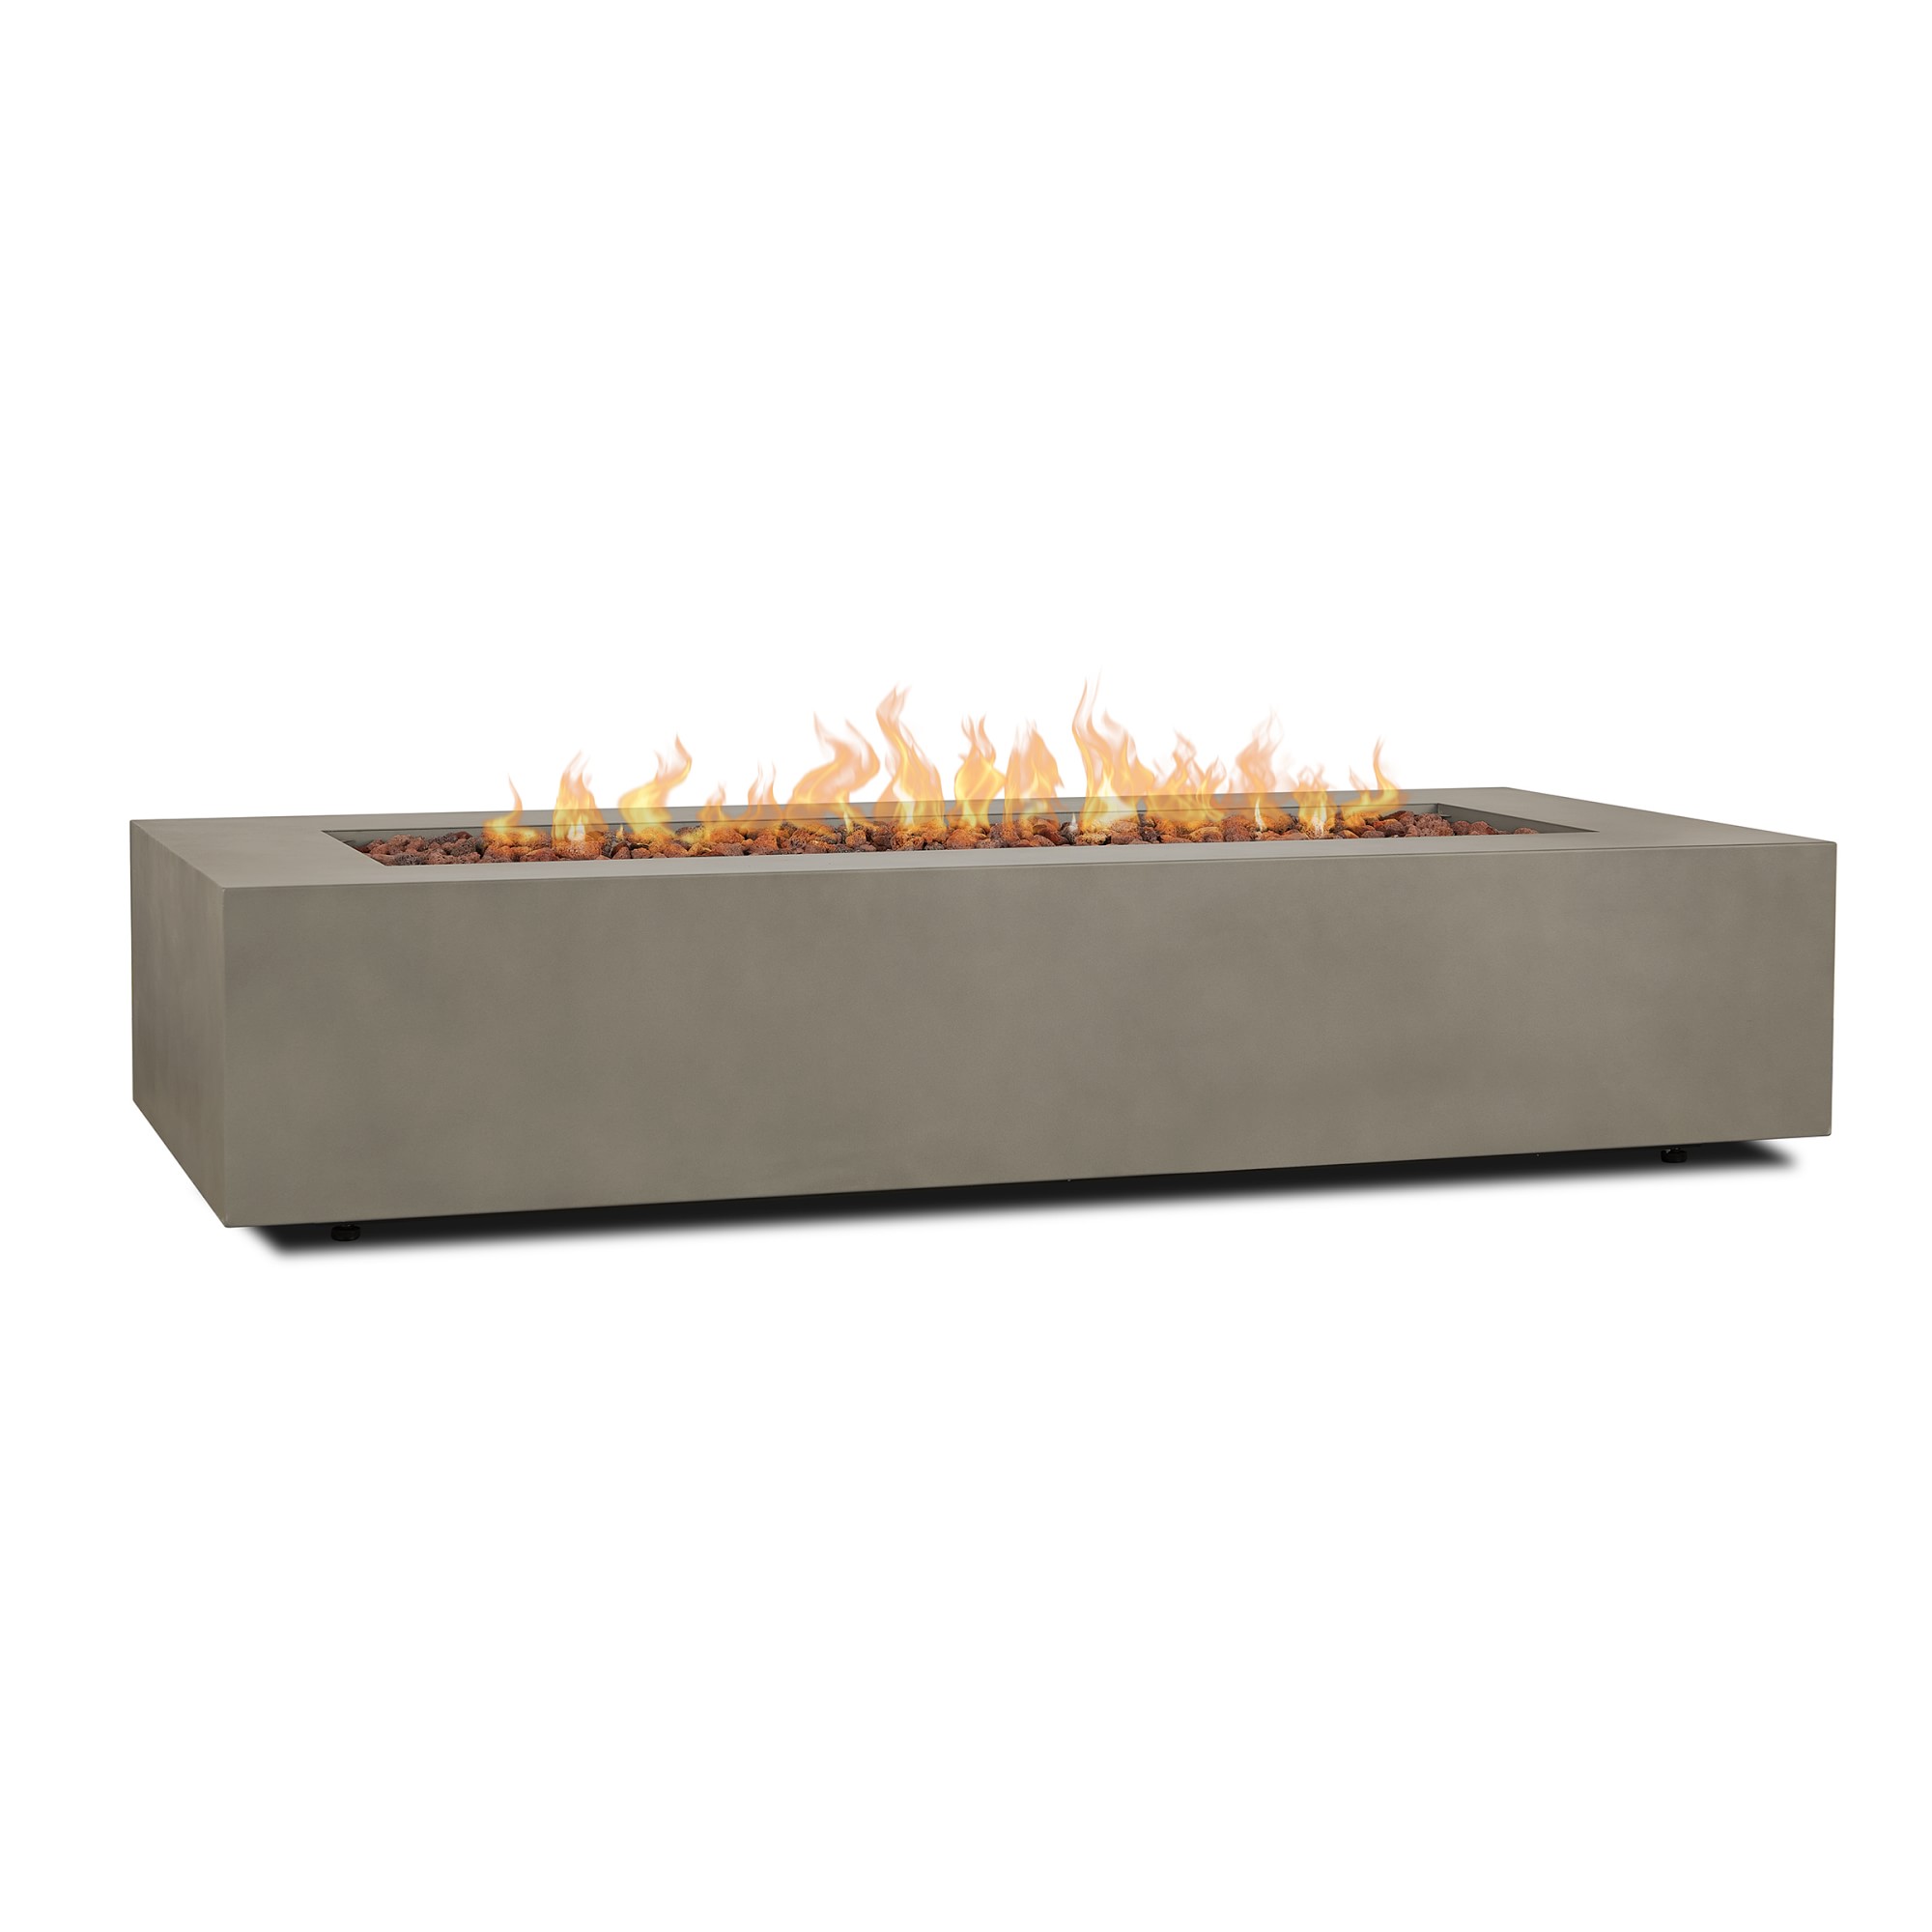 Cardona Rectangular Fire Table